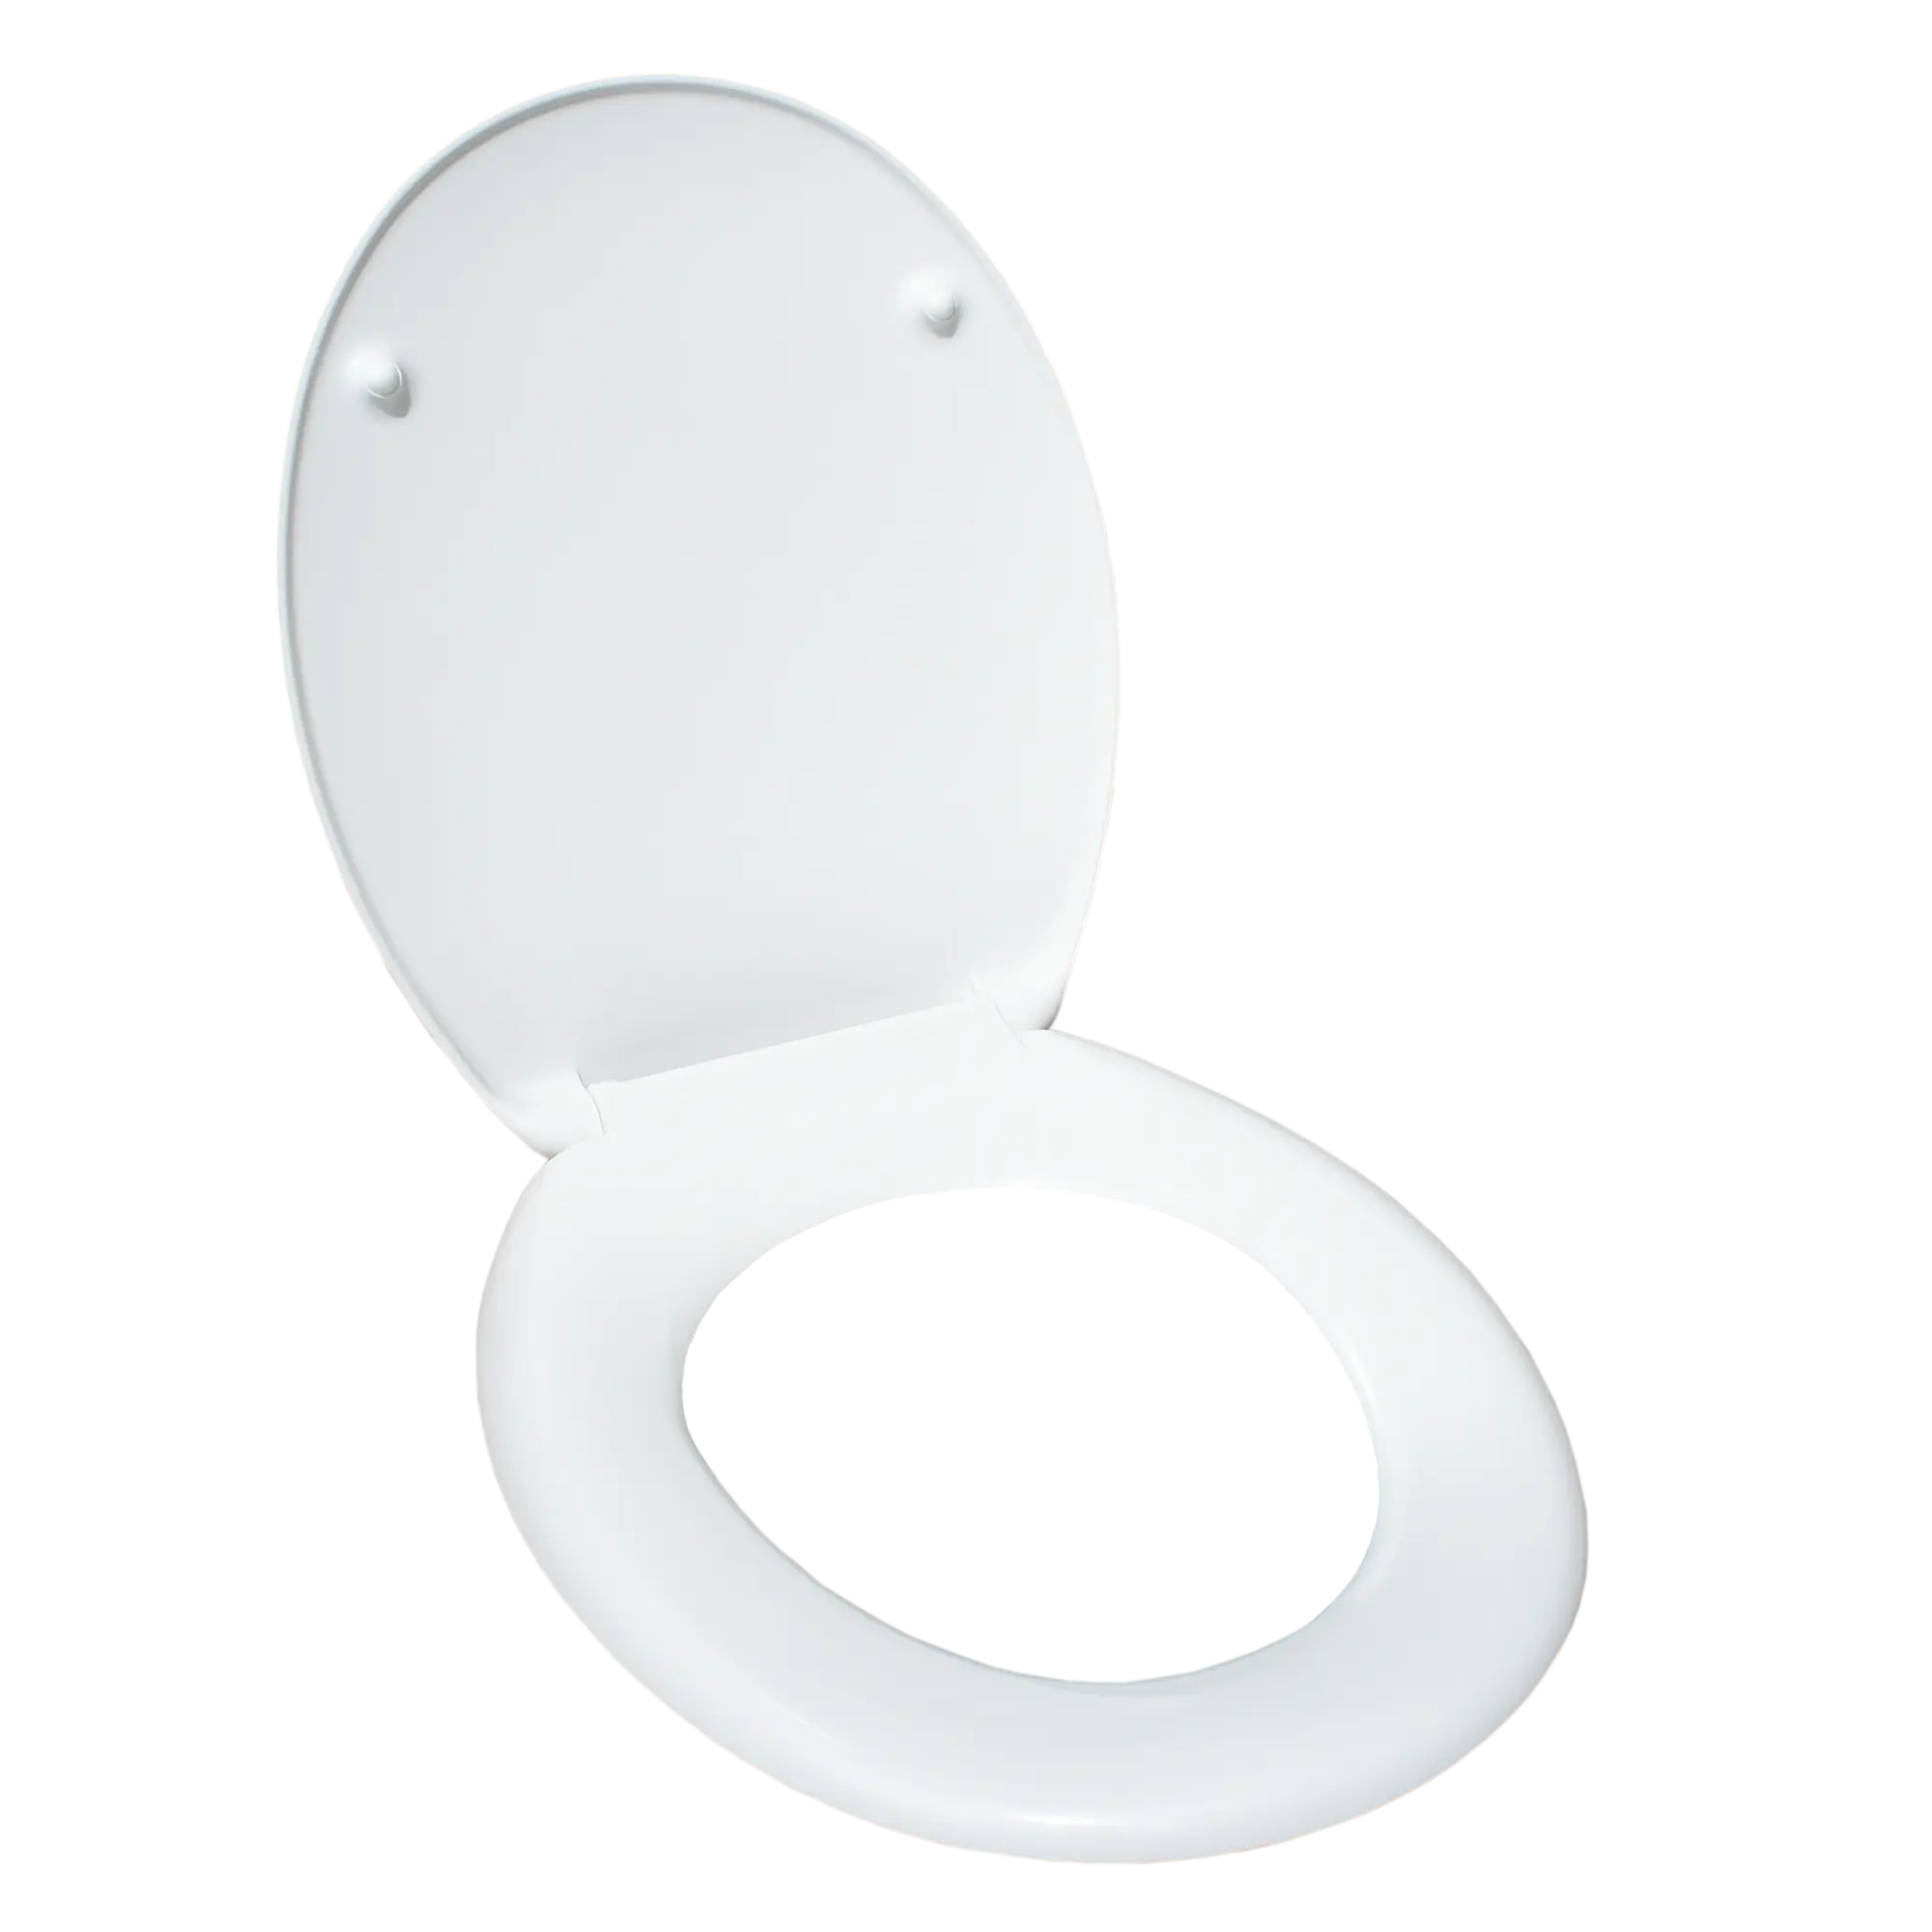 Copriwater ovale Universale Easy SENSEA duroplast bianco - 11